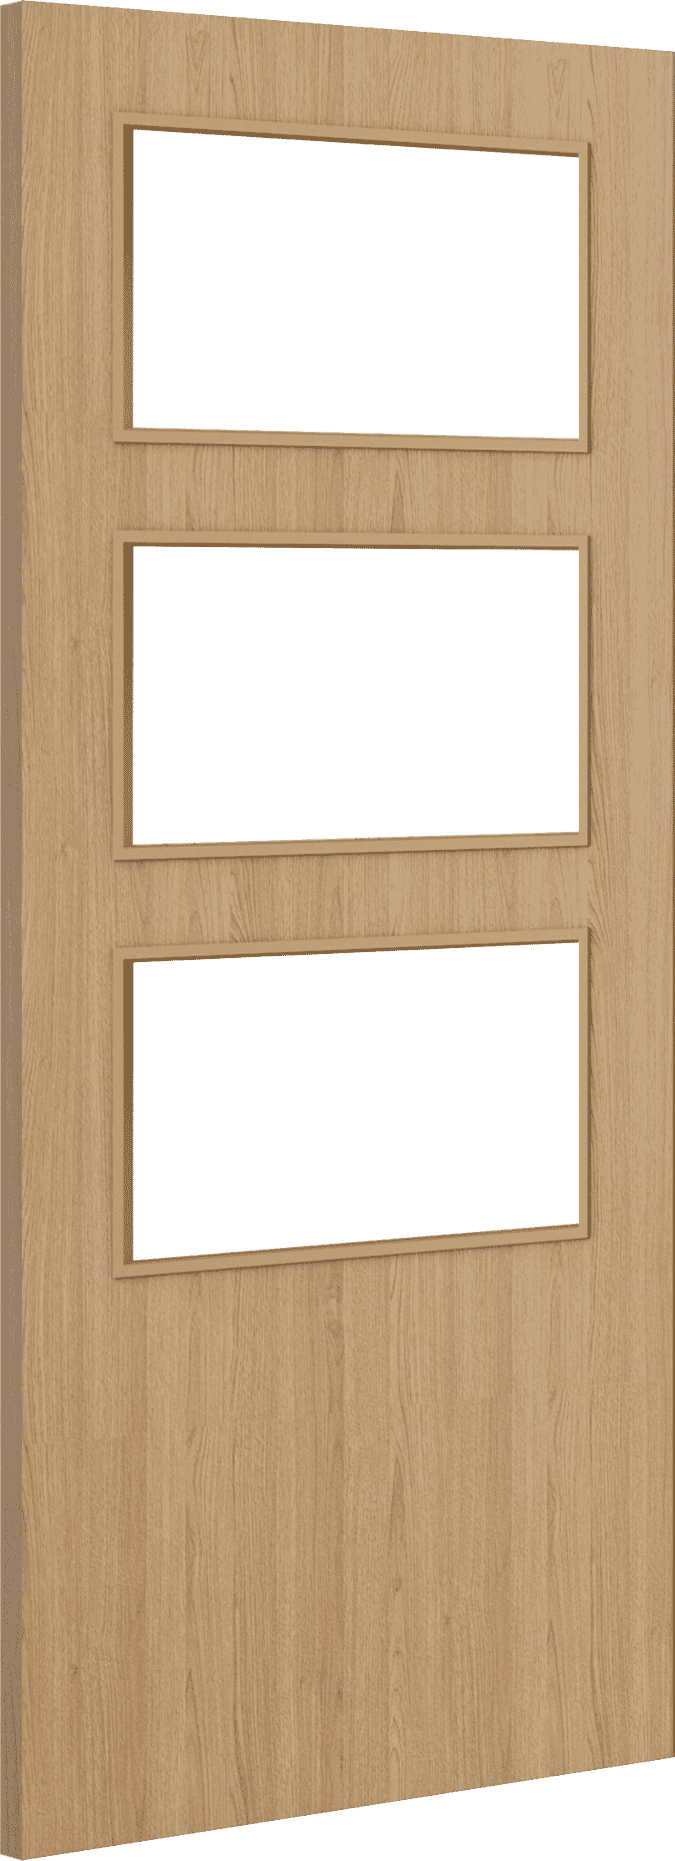 1981mm x 686mm x 44mm (27") Architectural Oak 03 Frosted Glazed - Prefinished FD30 Fire Door Blank